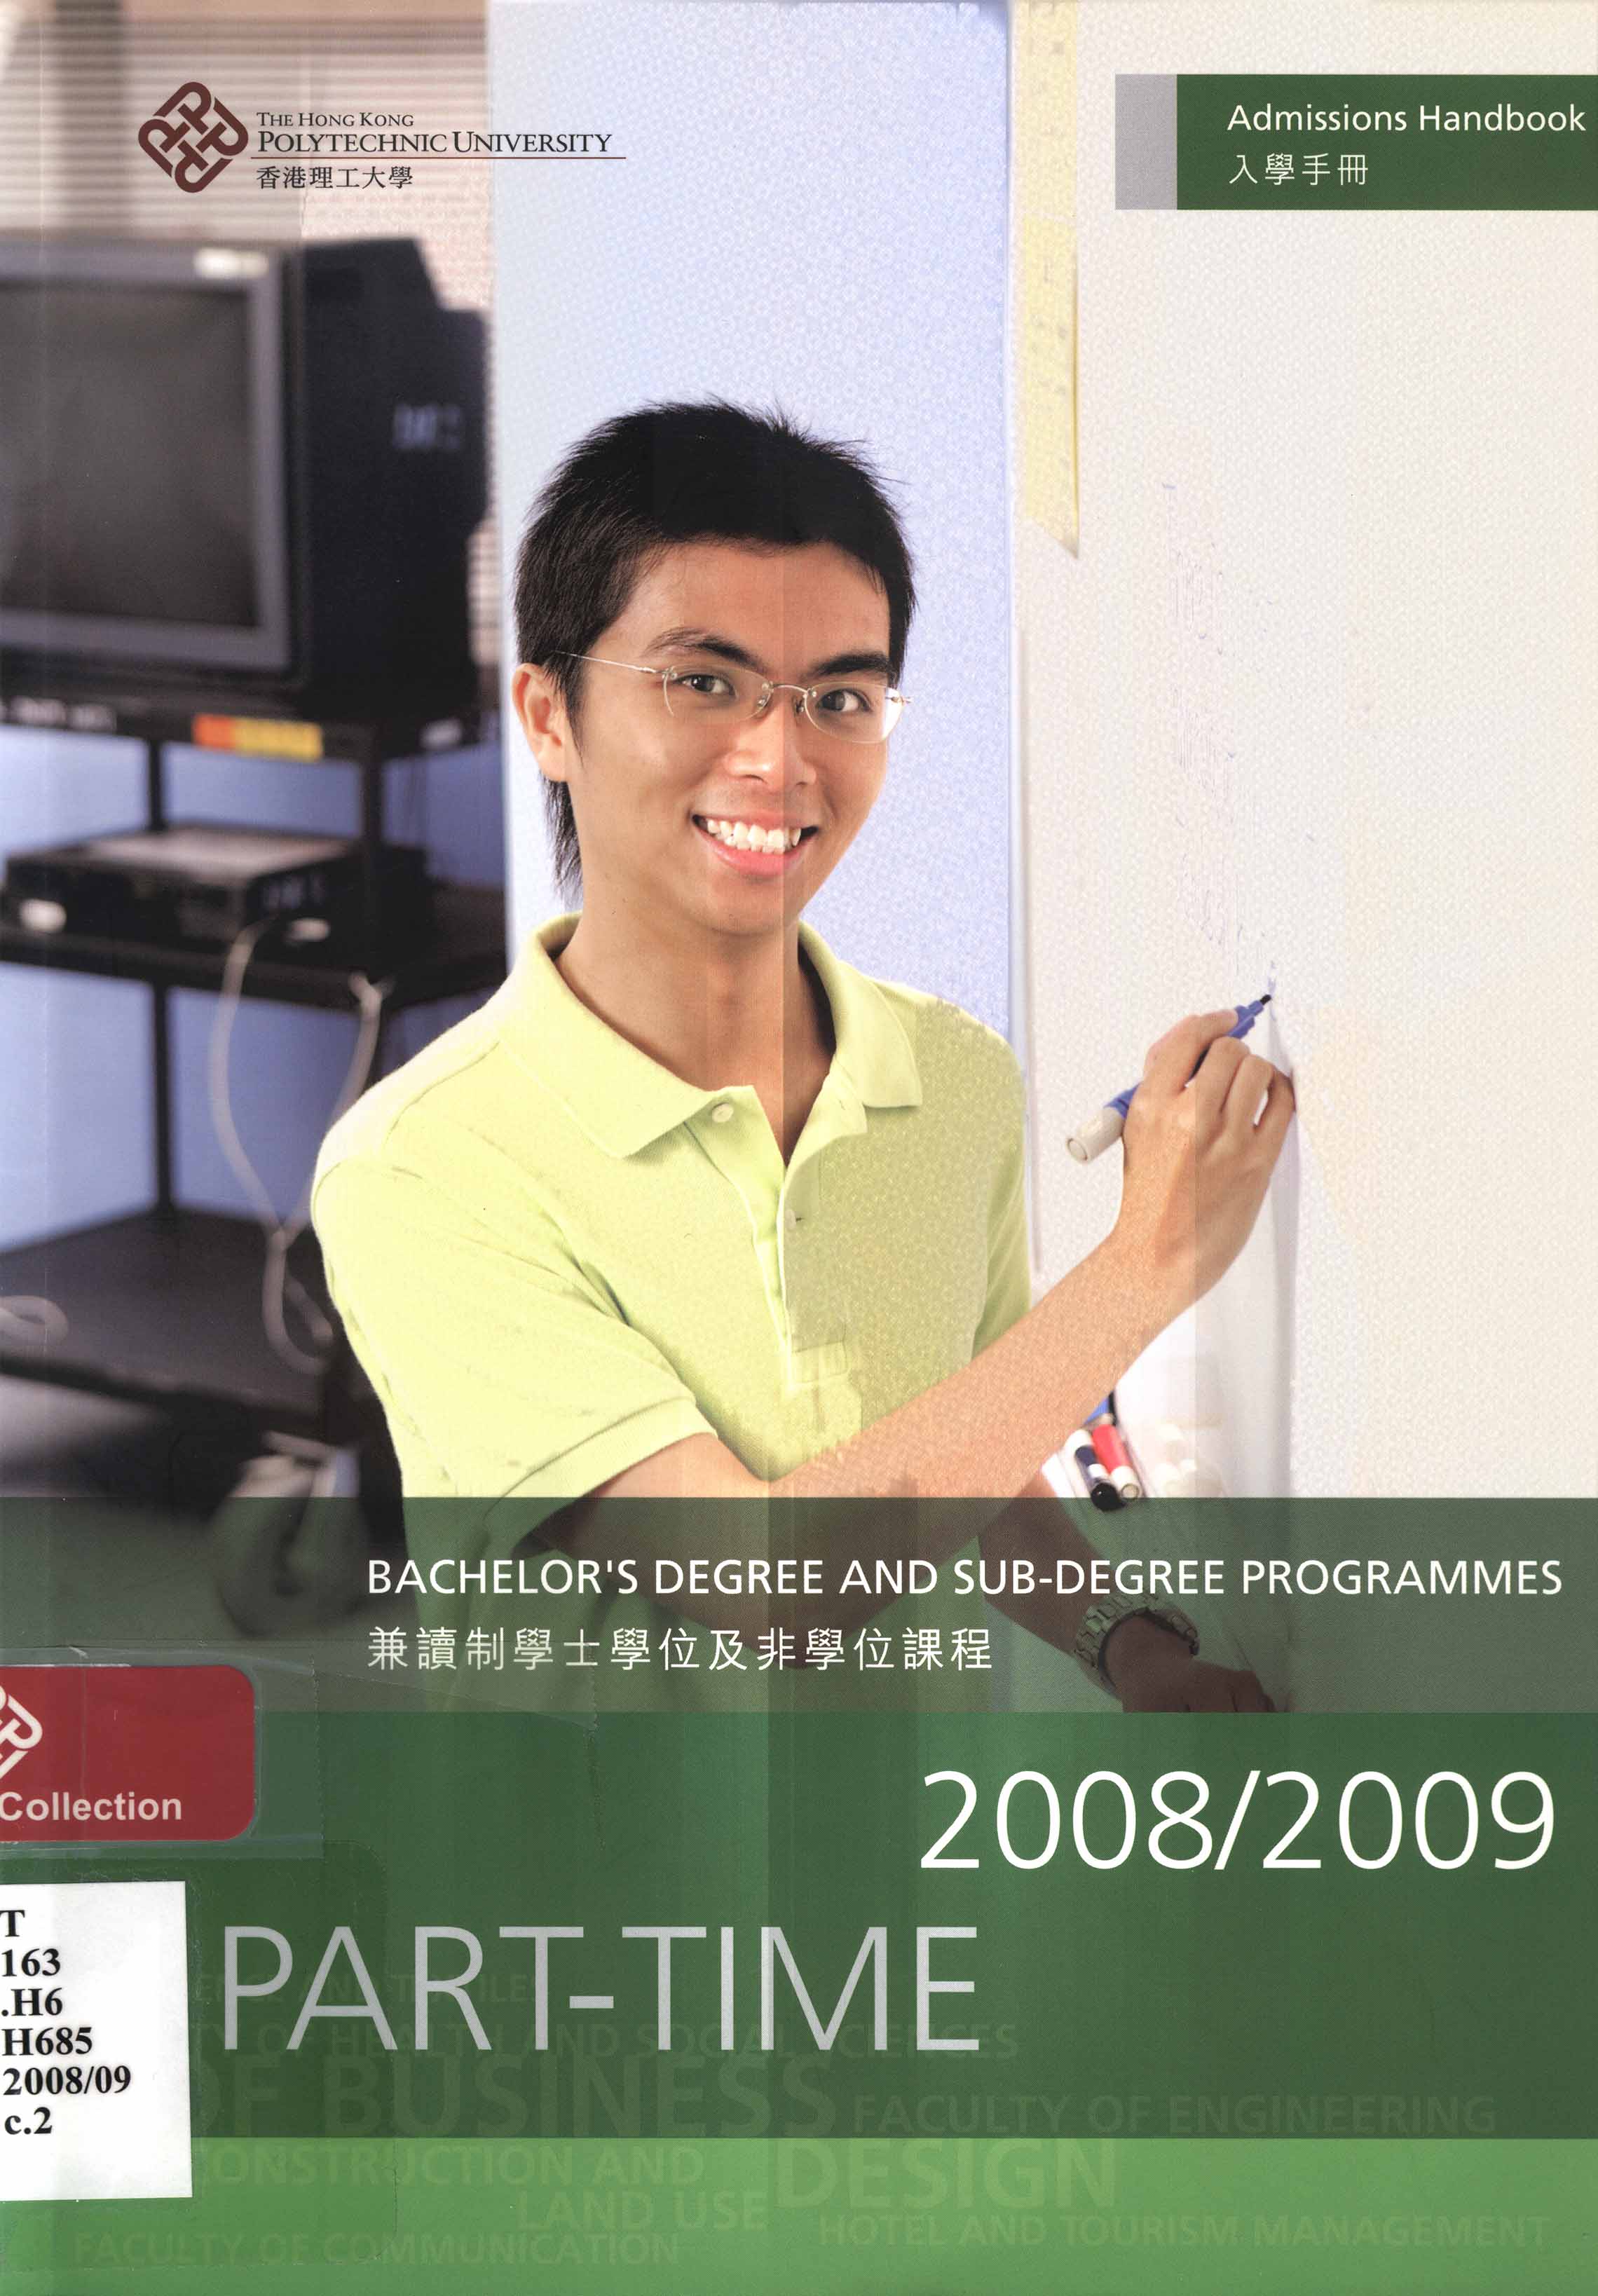 Hong Kong Polytechnic University. Prospectus. Part-time bachelor's degree and sub-degree programmes 2008/09